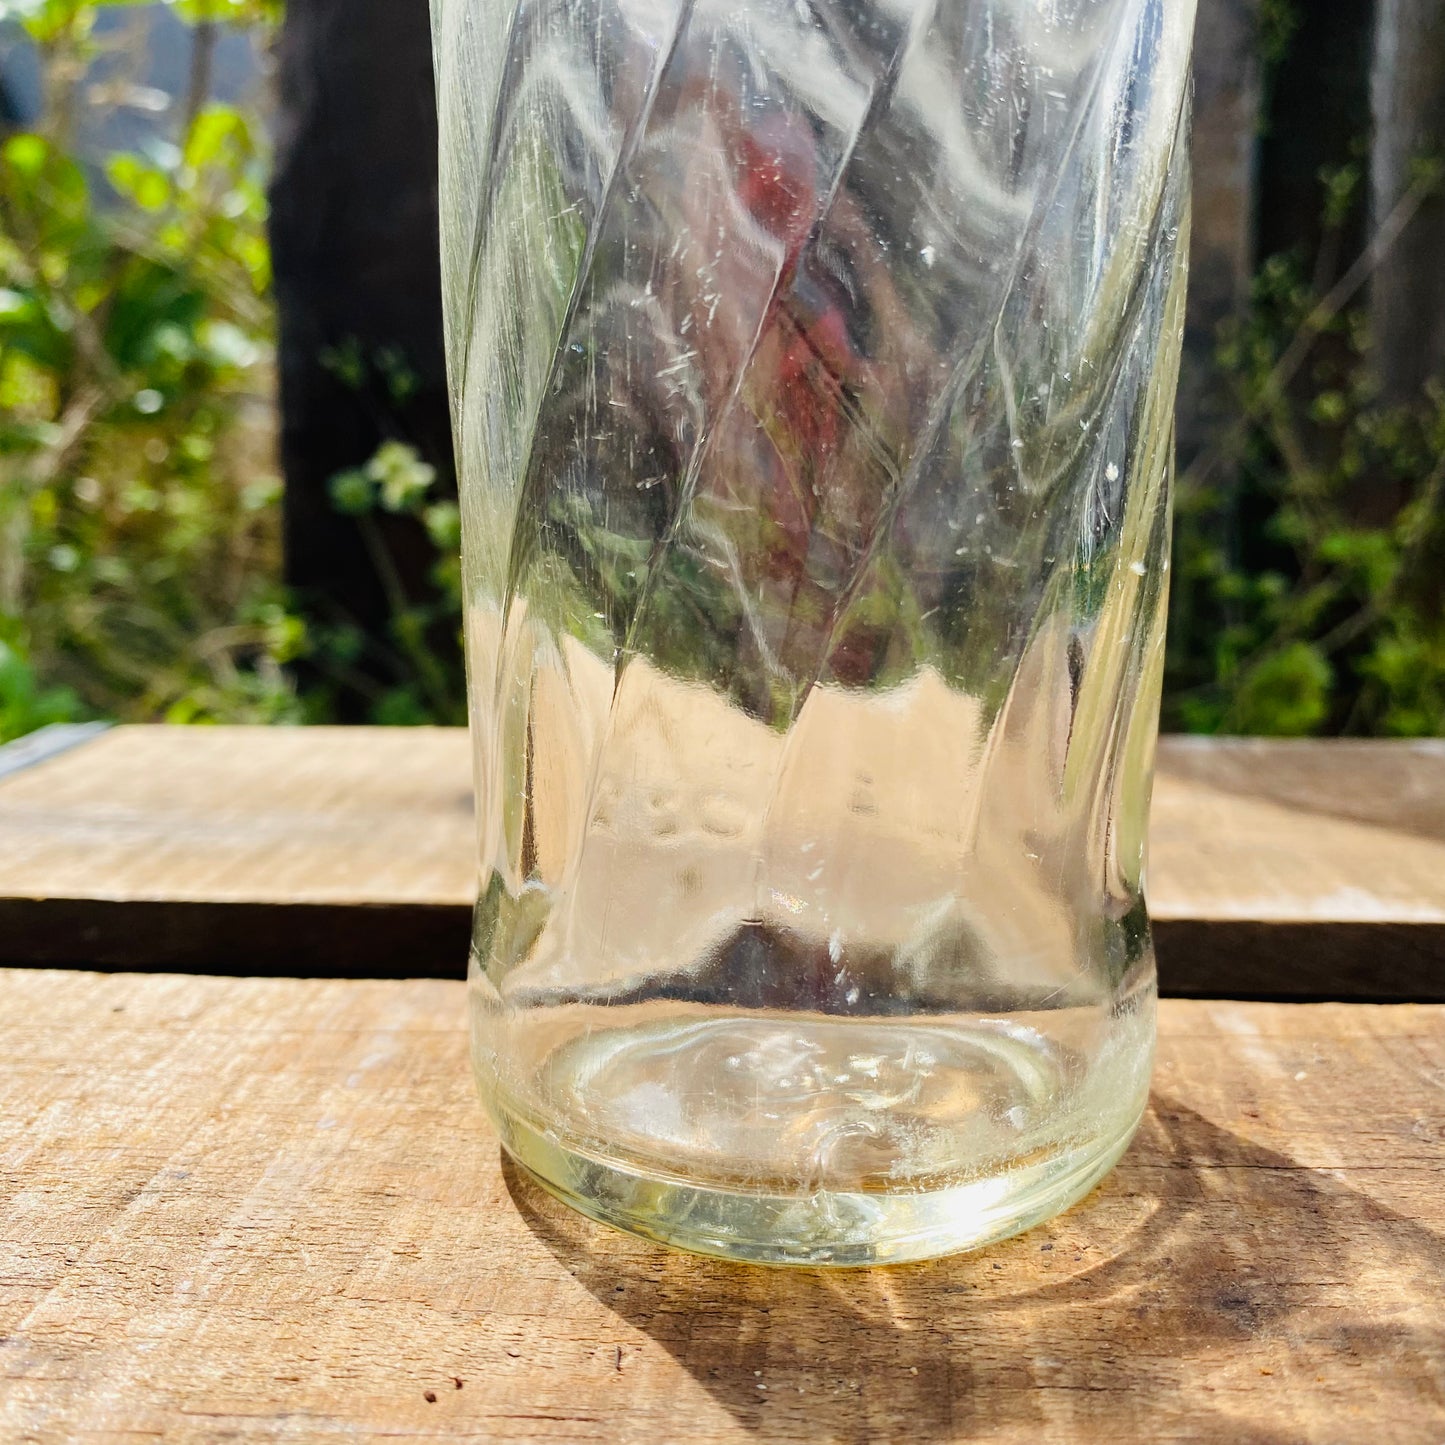 【vintage】 PEPSI-COLA 瓶 ガラスボトル